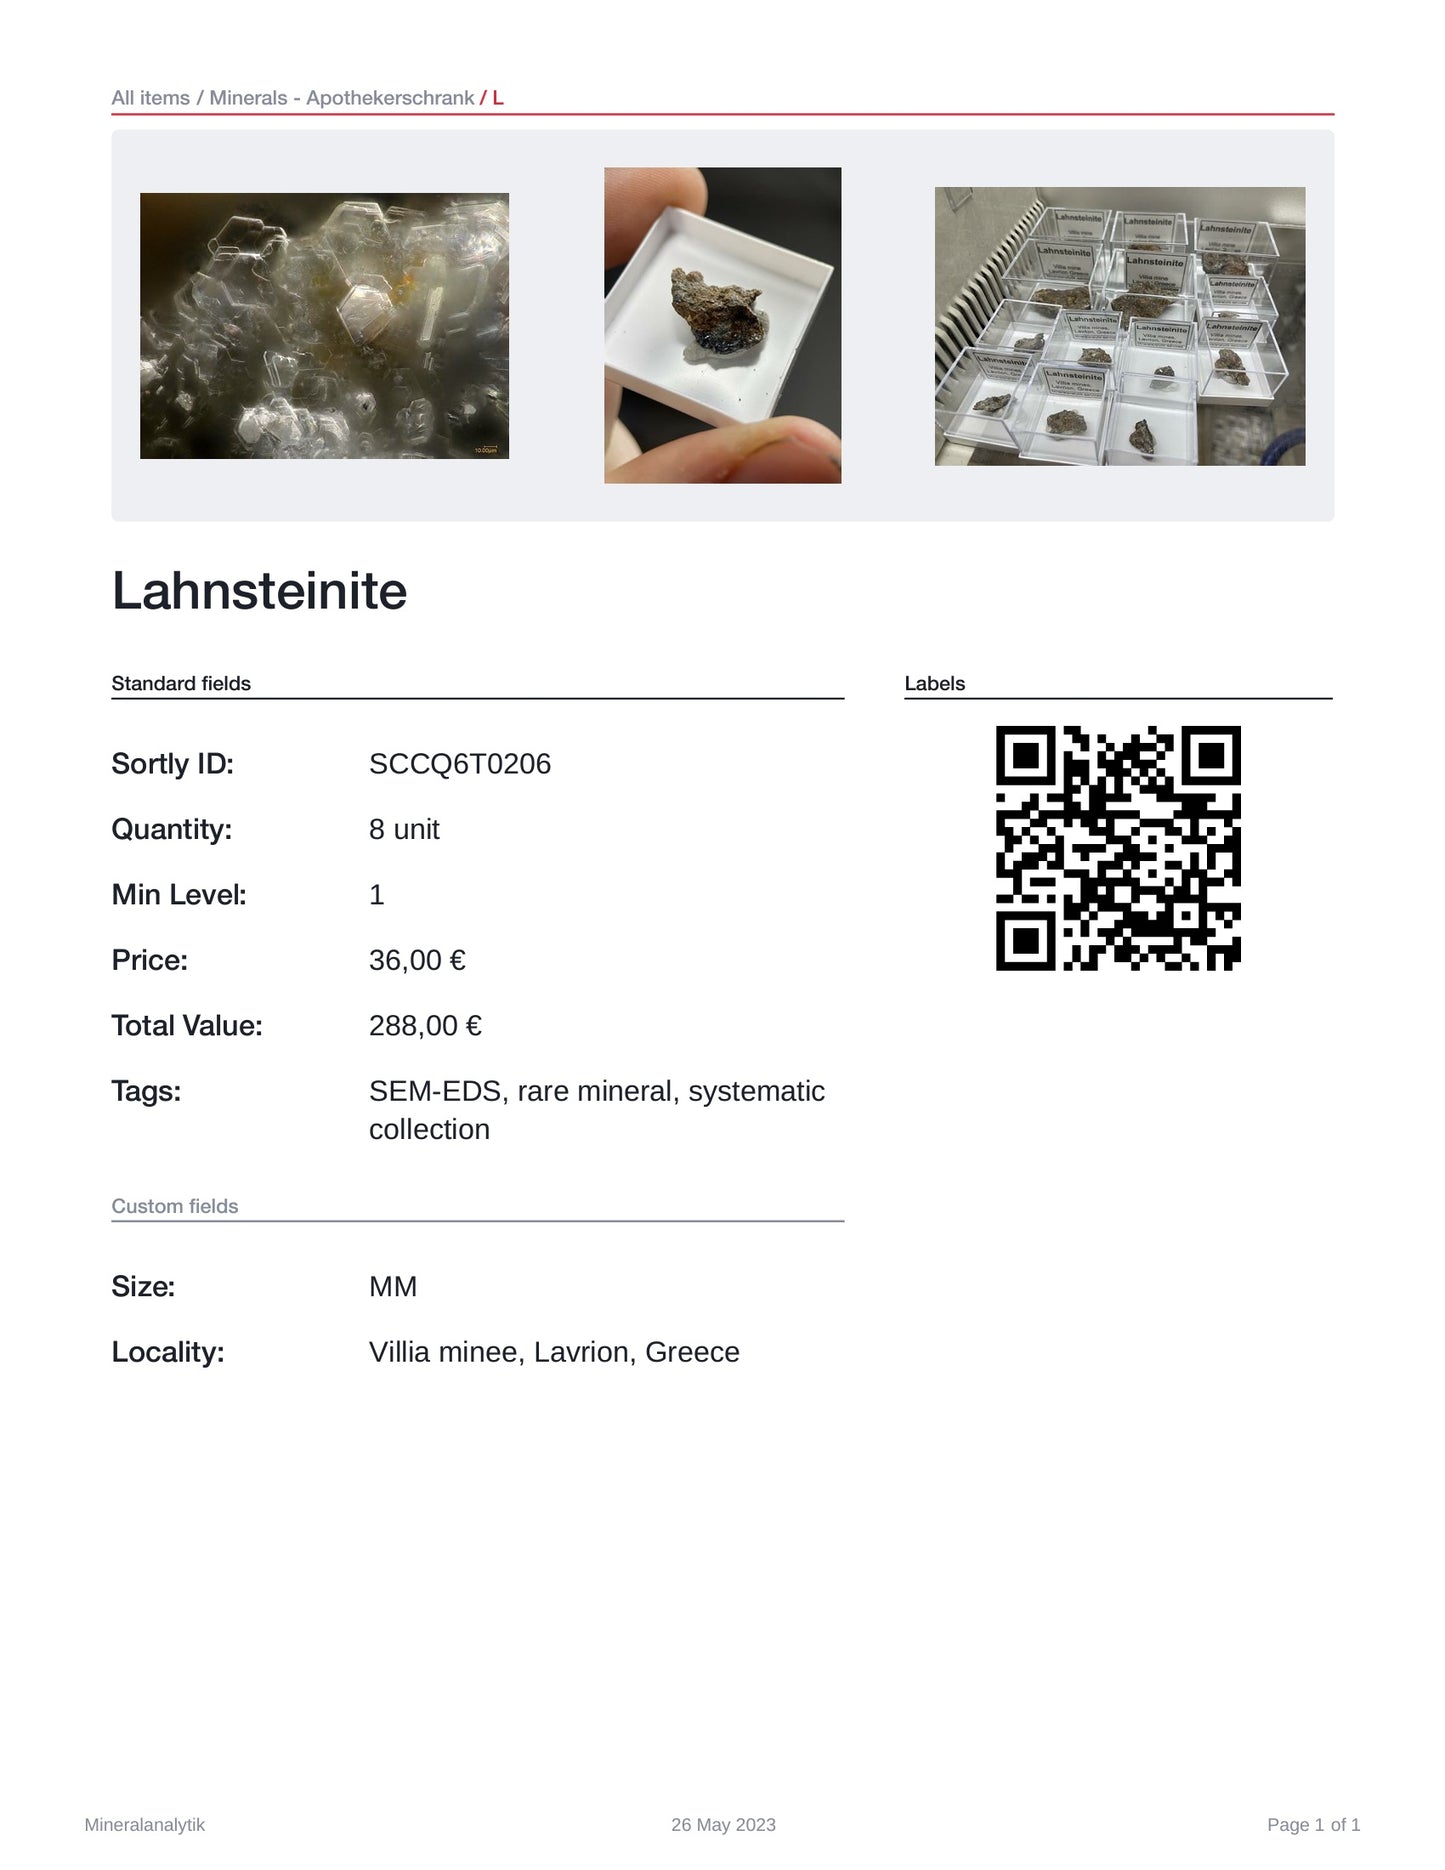 Lahnsteinite